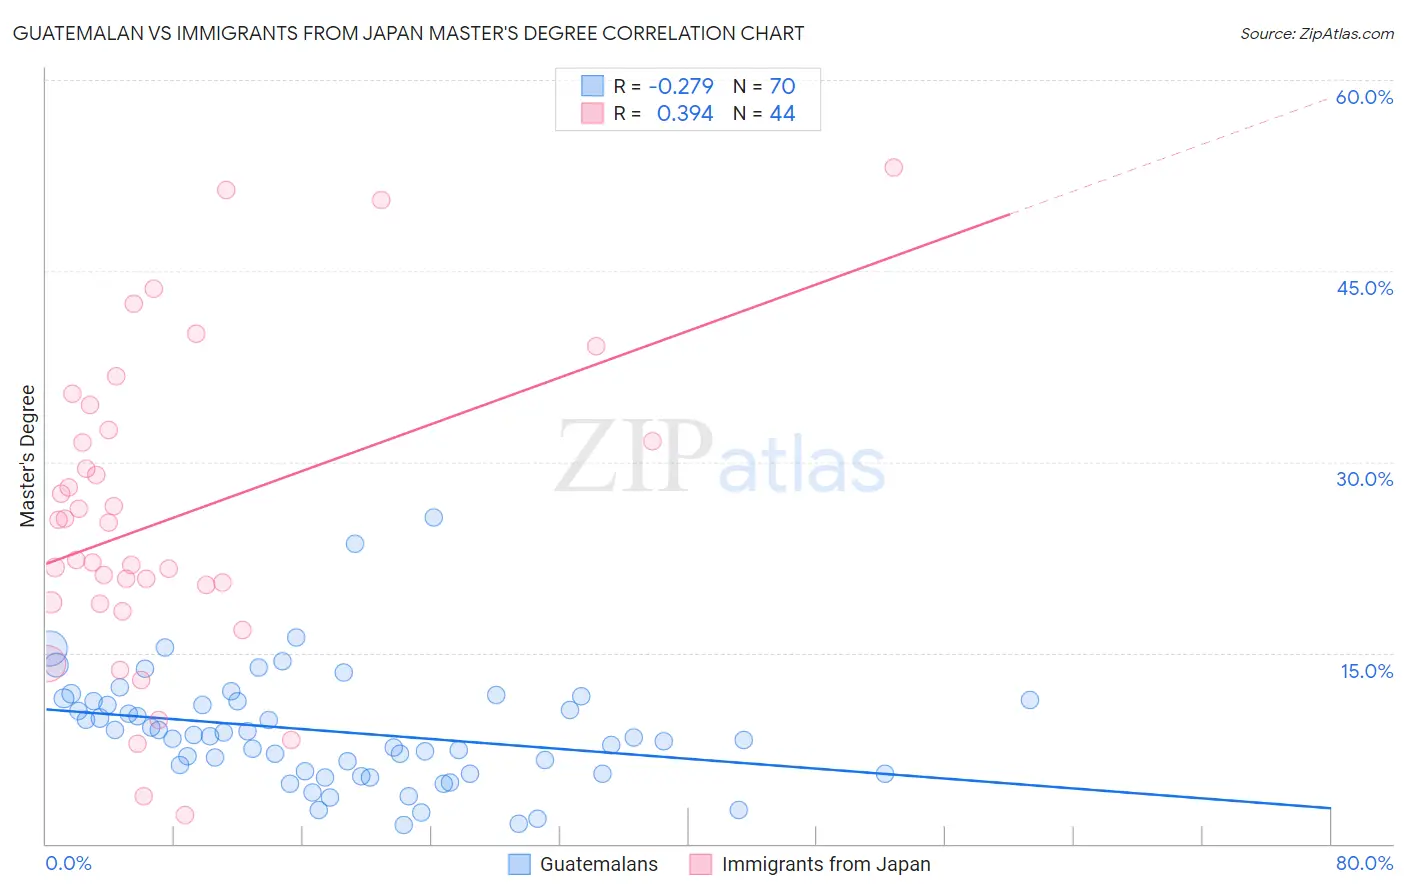 Guatemalan vs Immigrants from Japan Master's Degree